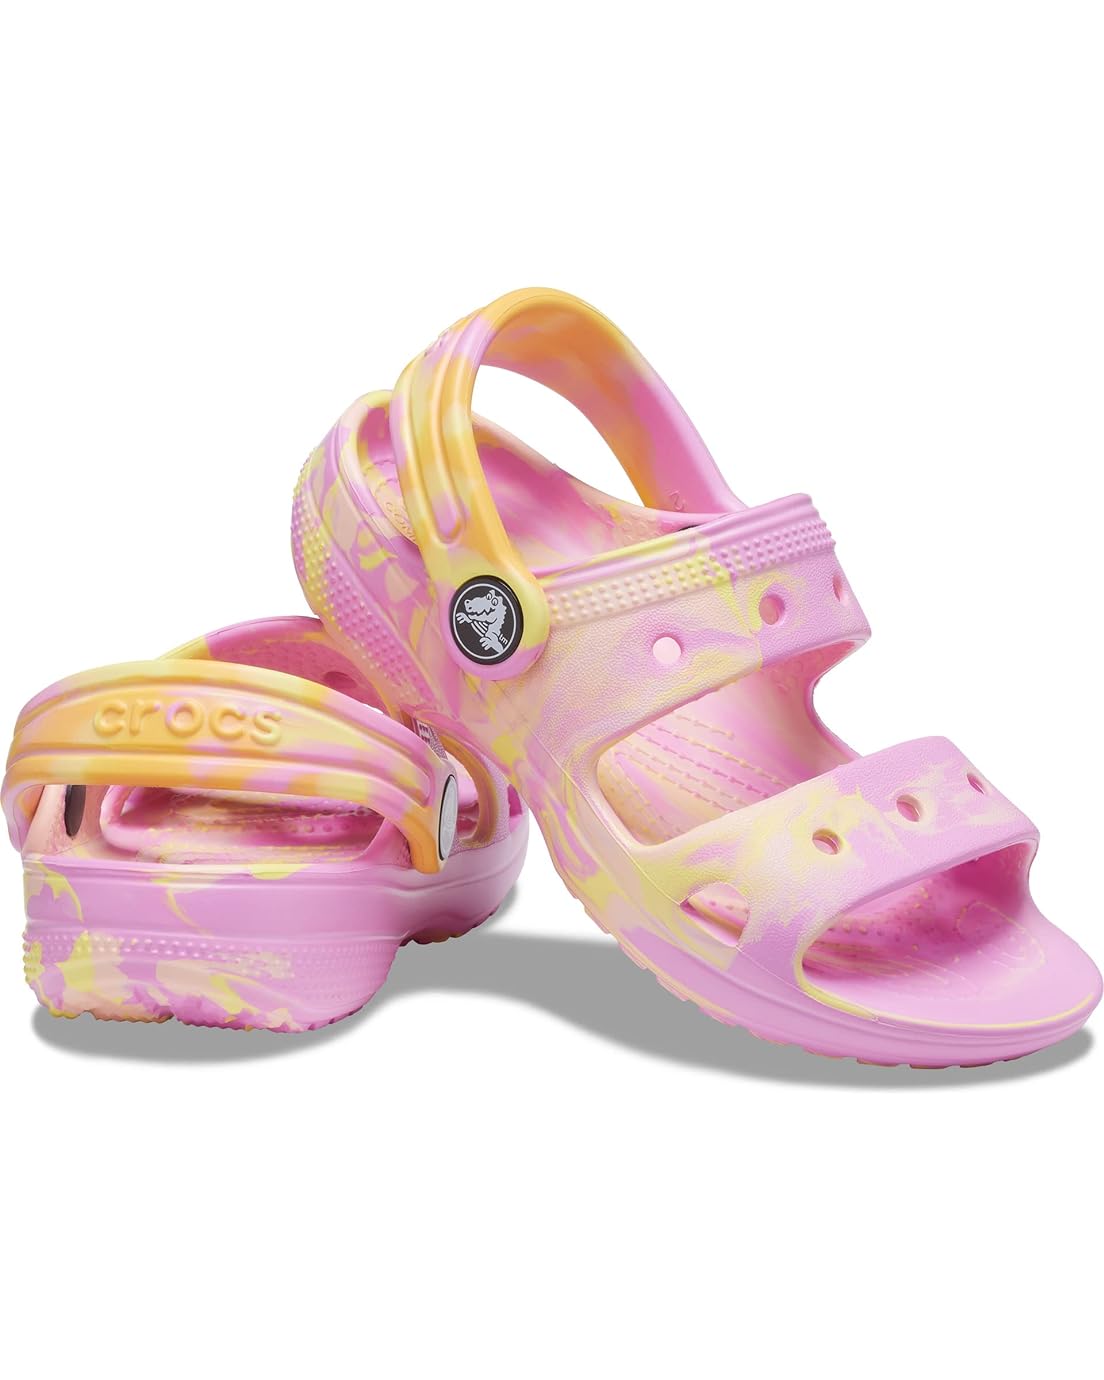 Crocs Kids Classic Marbled Tie-Dye Sandal (Toddler)